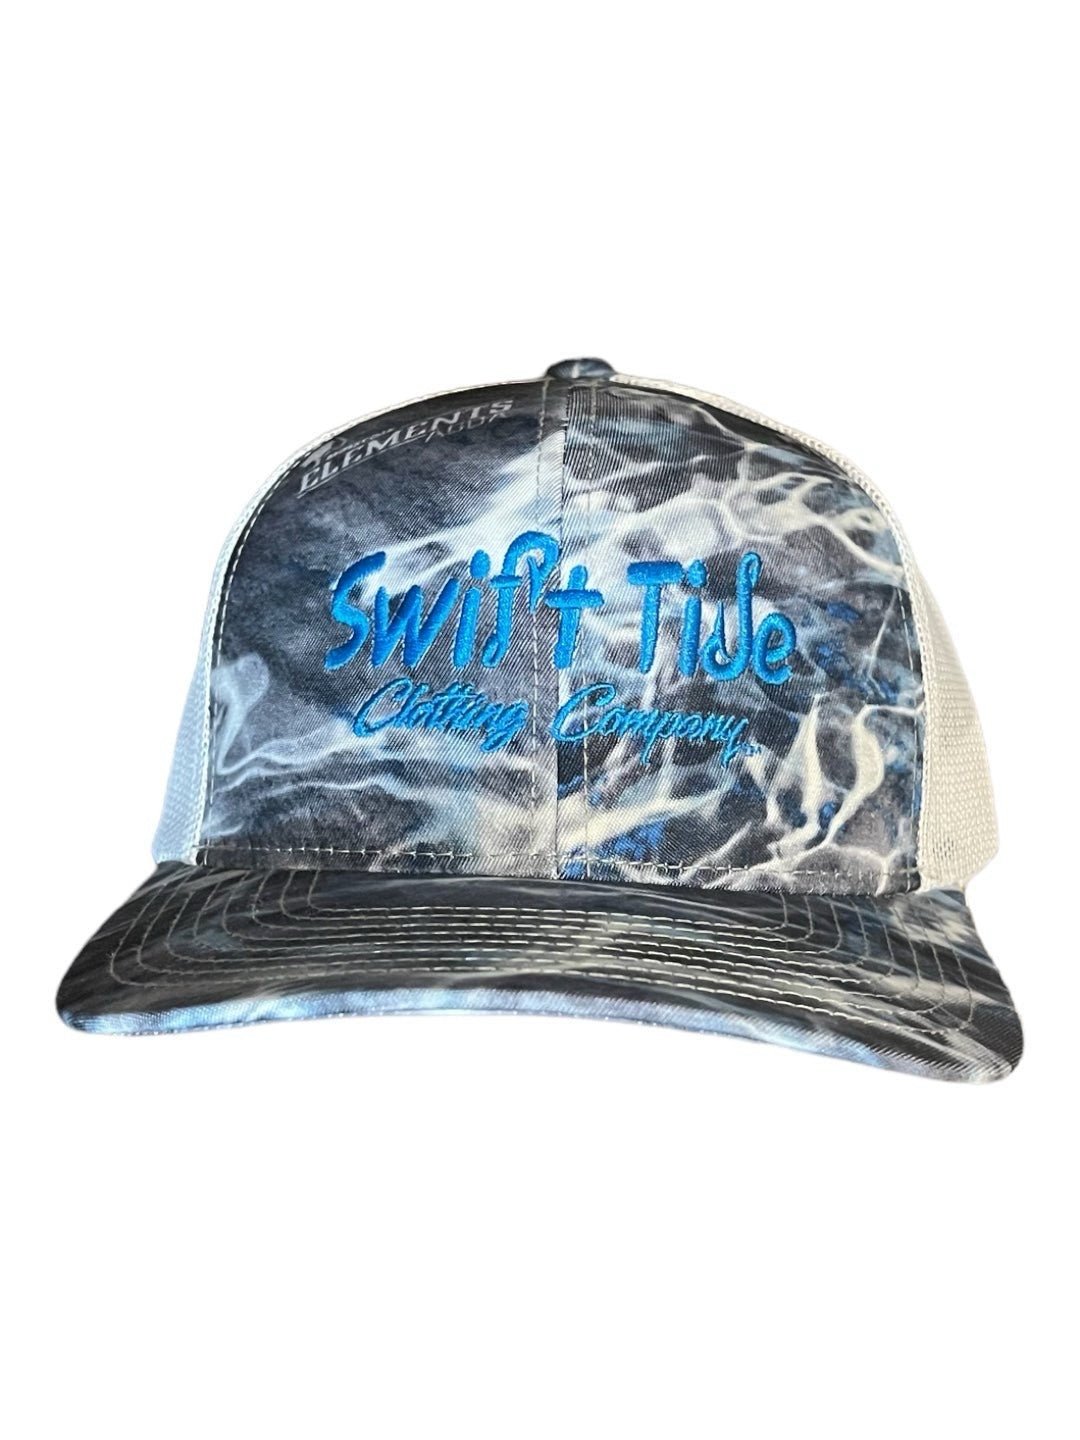 Water Camo Trucker Hats - Swift Tide Clothing Company